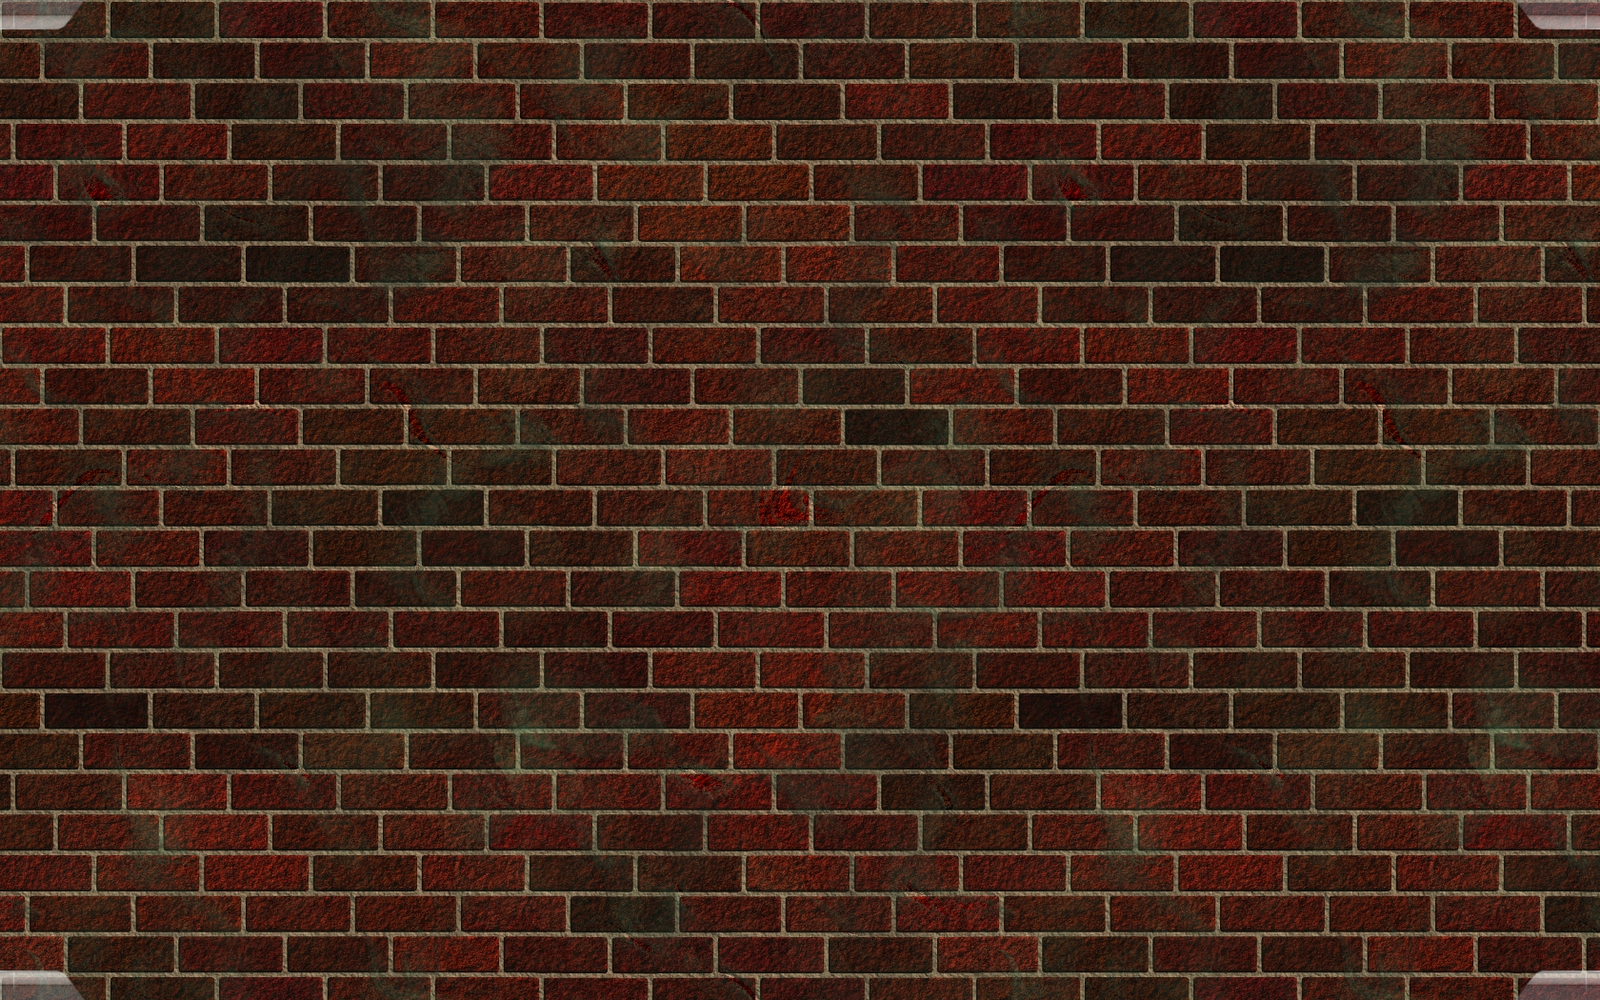 Brick Vector Picture: Brick Tiles For Interior Walls